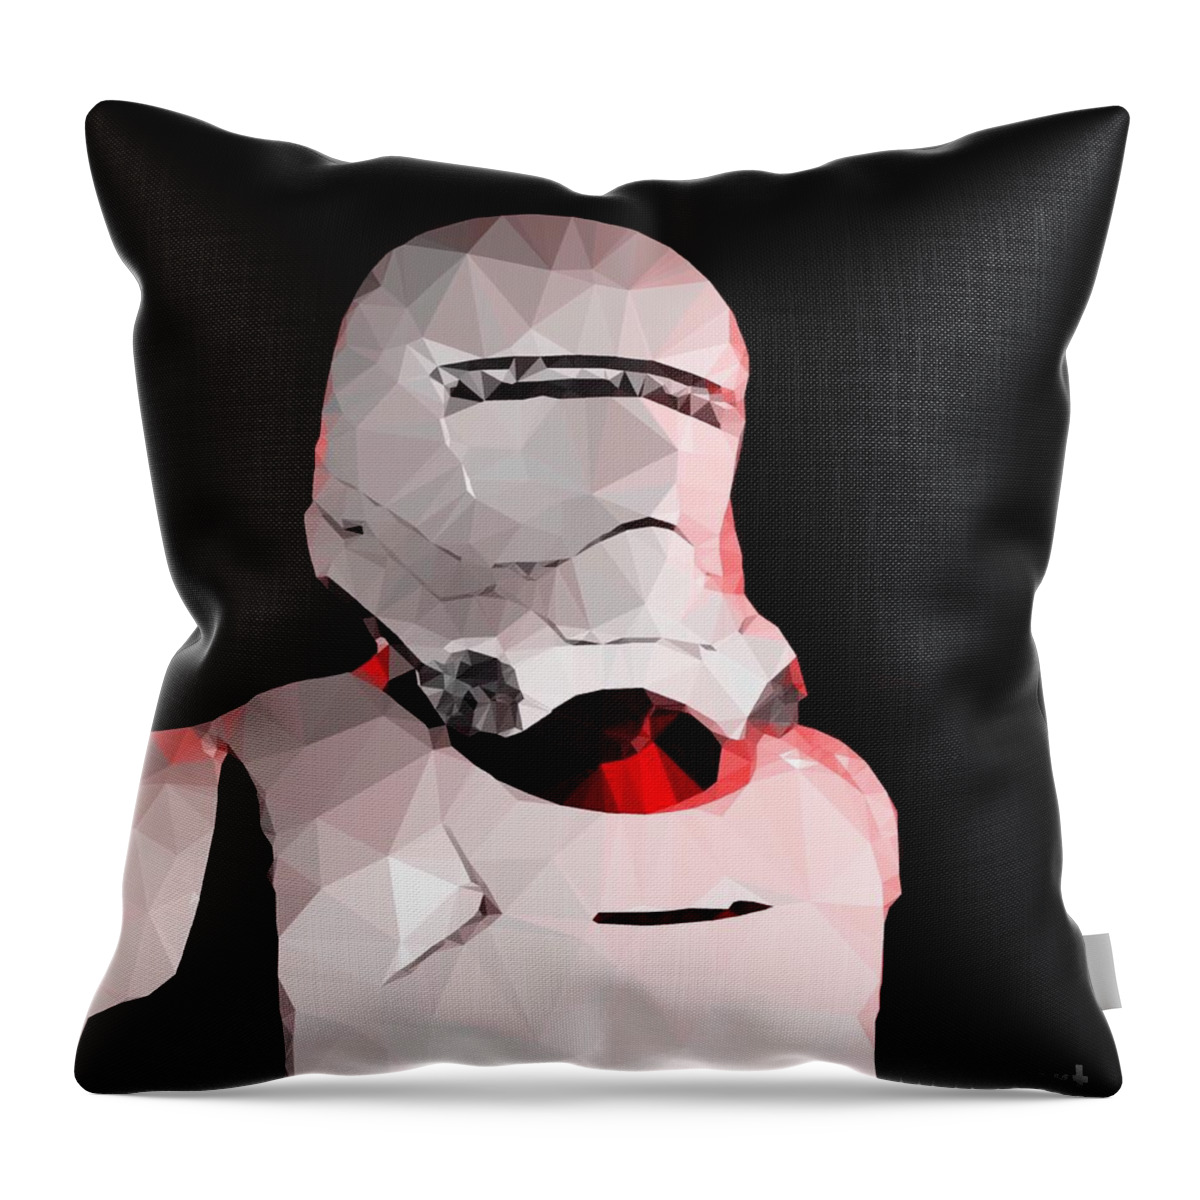 Stormtrooper Throw Pillow featuring the digital art StormTrooper Next Gen by HELGE Art Gallery